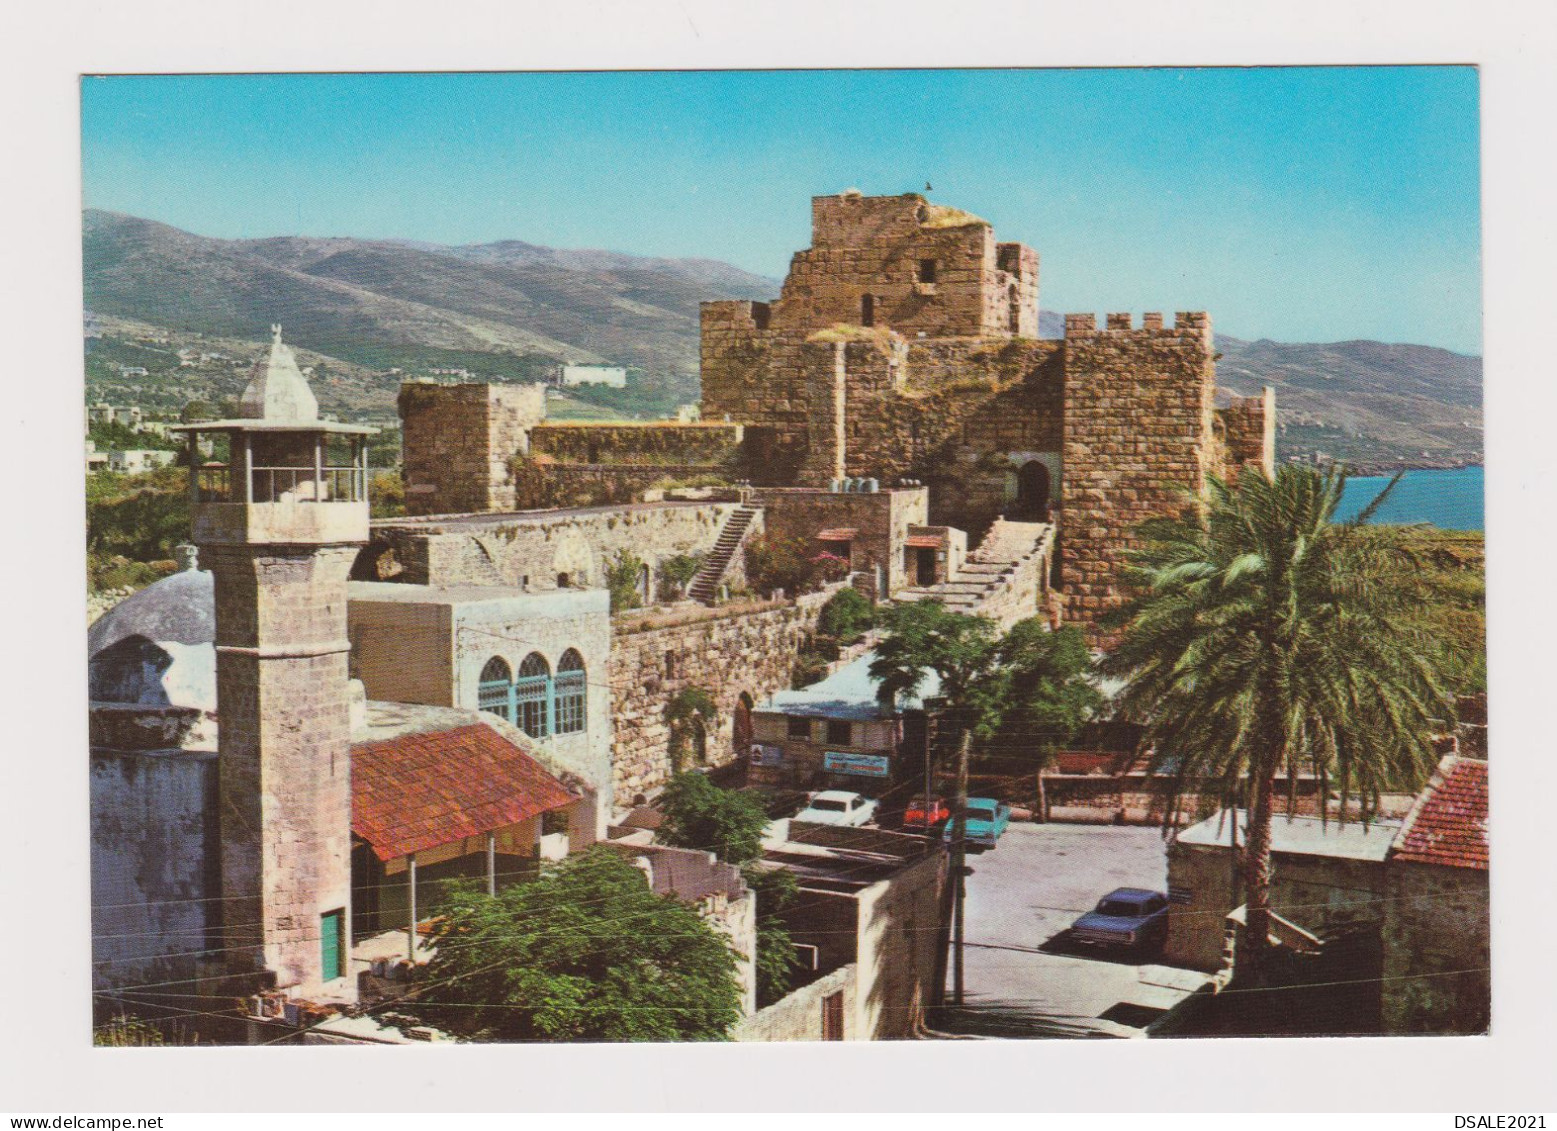 Lebanon Libanon Liban BYBLOS The Mosque And Citadel View, Vintage Photo Postcard RPPc AK (1282) - Lebanon